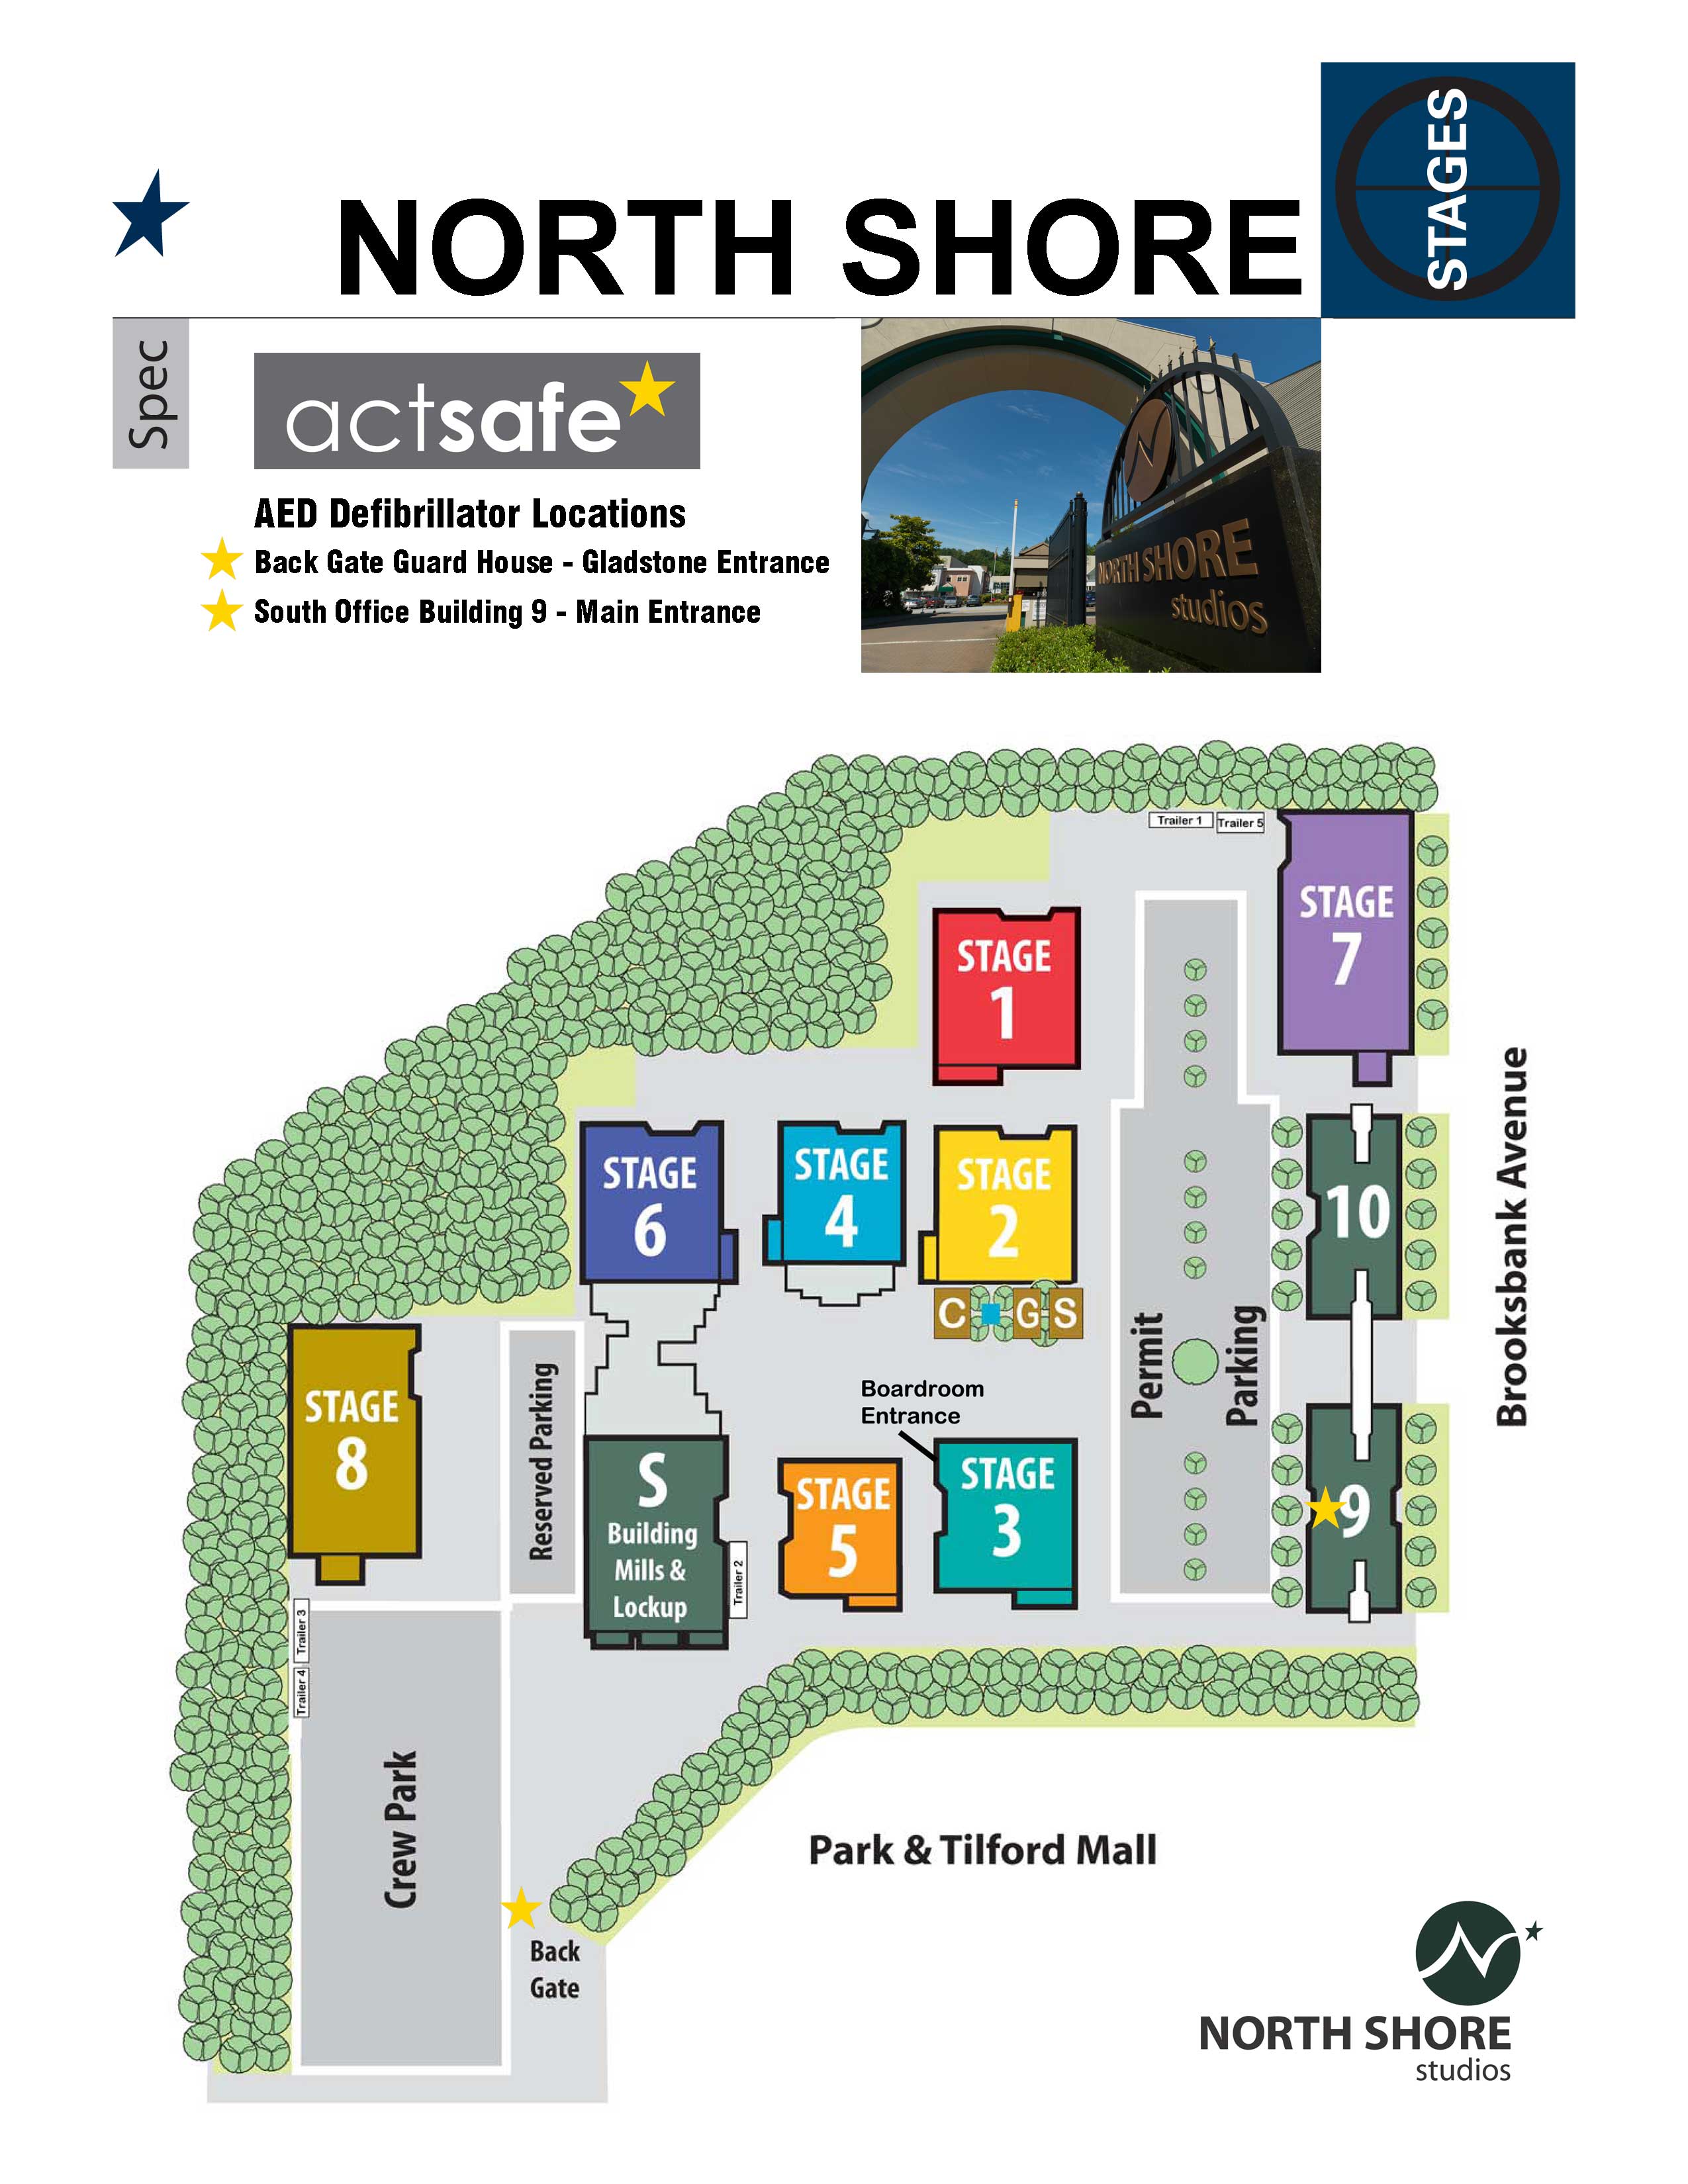 aed locations map in north shore studios